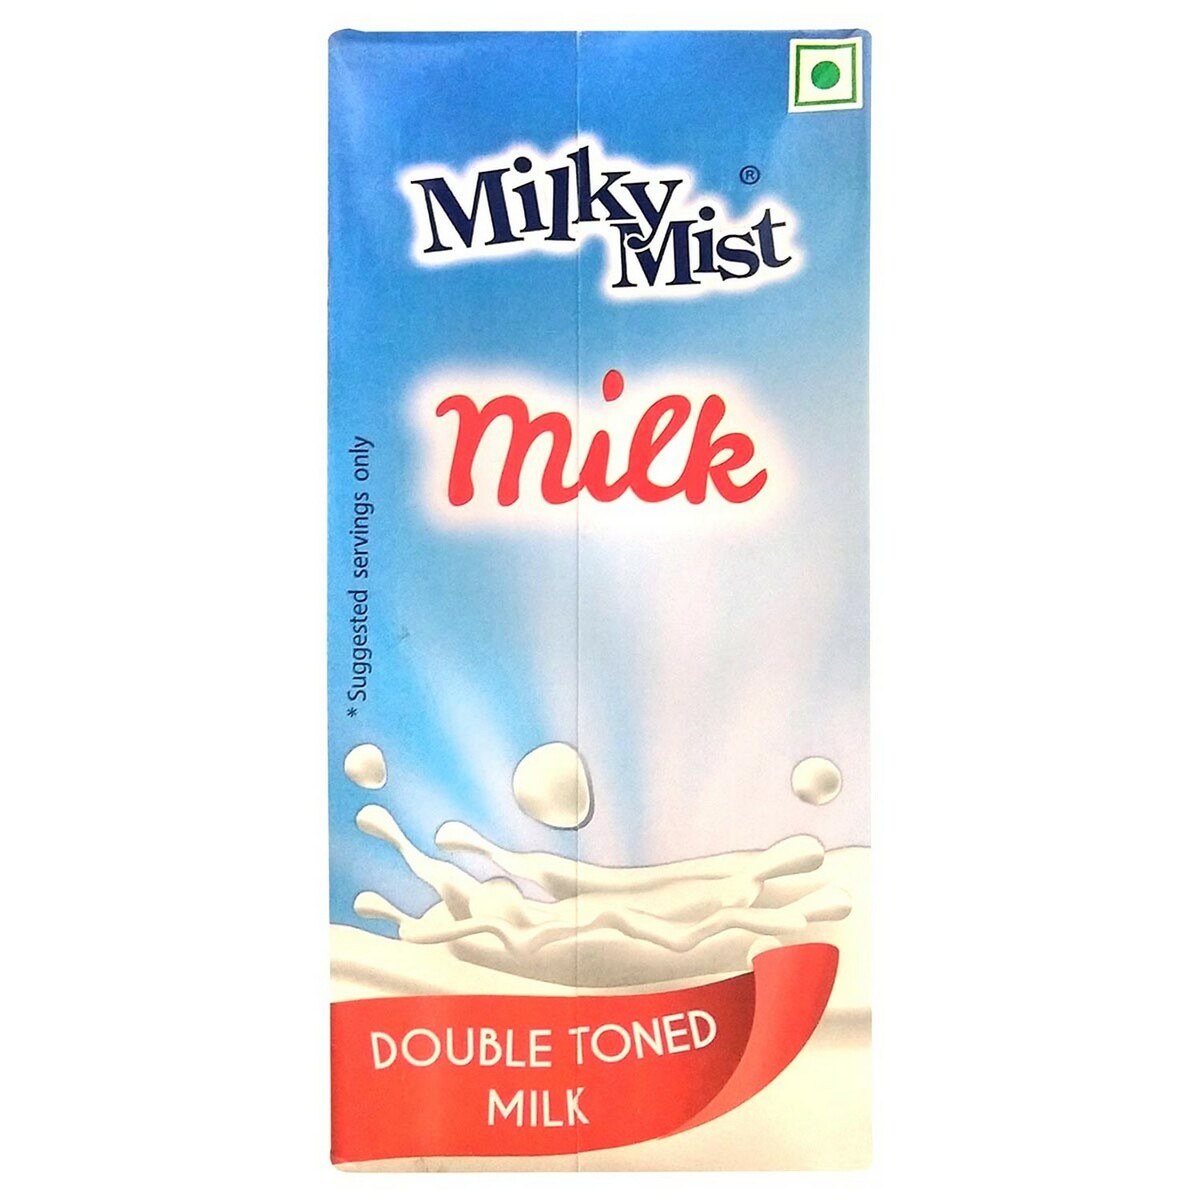 Milky Mist UHT Milk 1 Litre (Double Toned Milk)